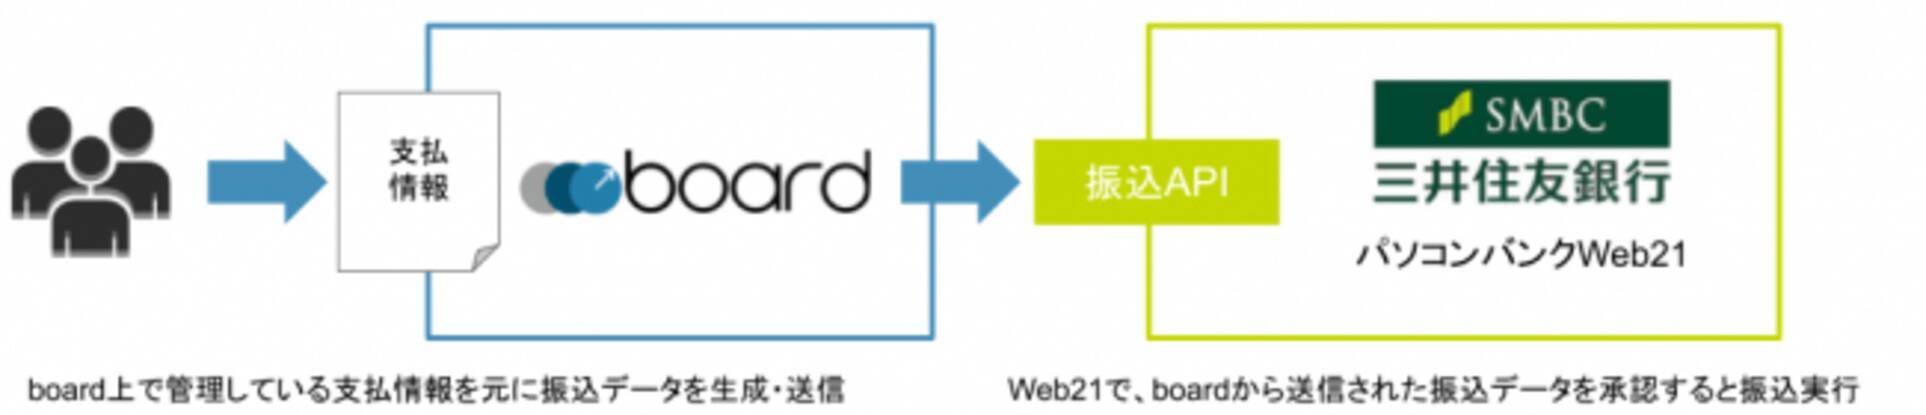 Boardが三井住友銀行の法人向けインターネットバンキング パソコンバンクweb21 とapi連携 振込データ送信機能の提供を開始 19年7月9日 エキサイトニュース